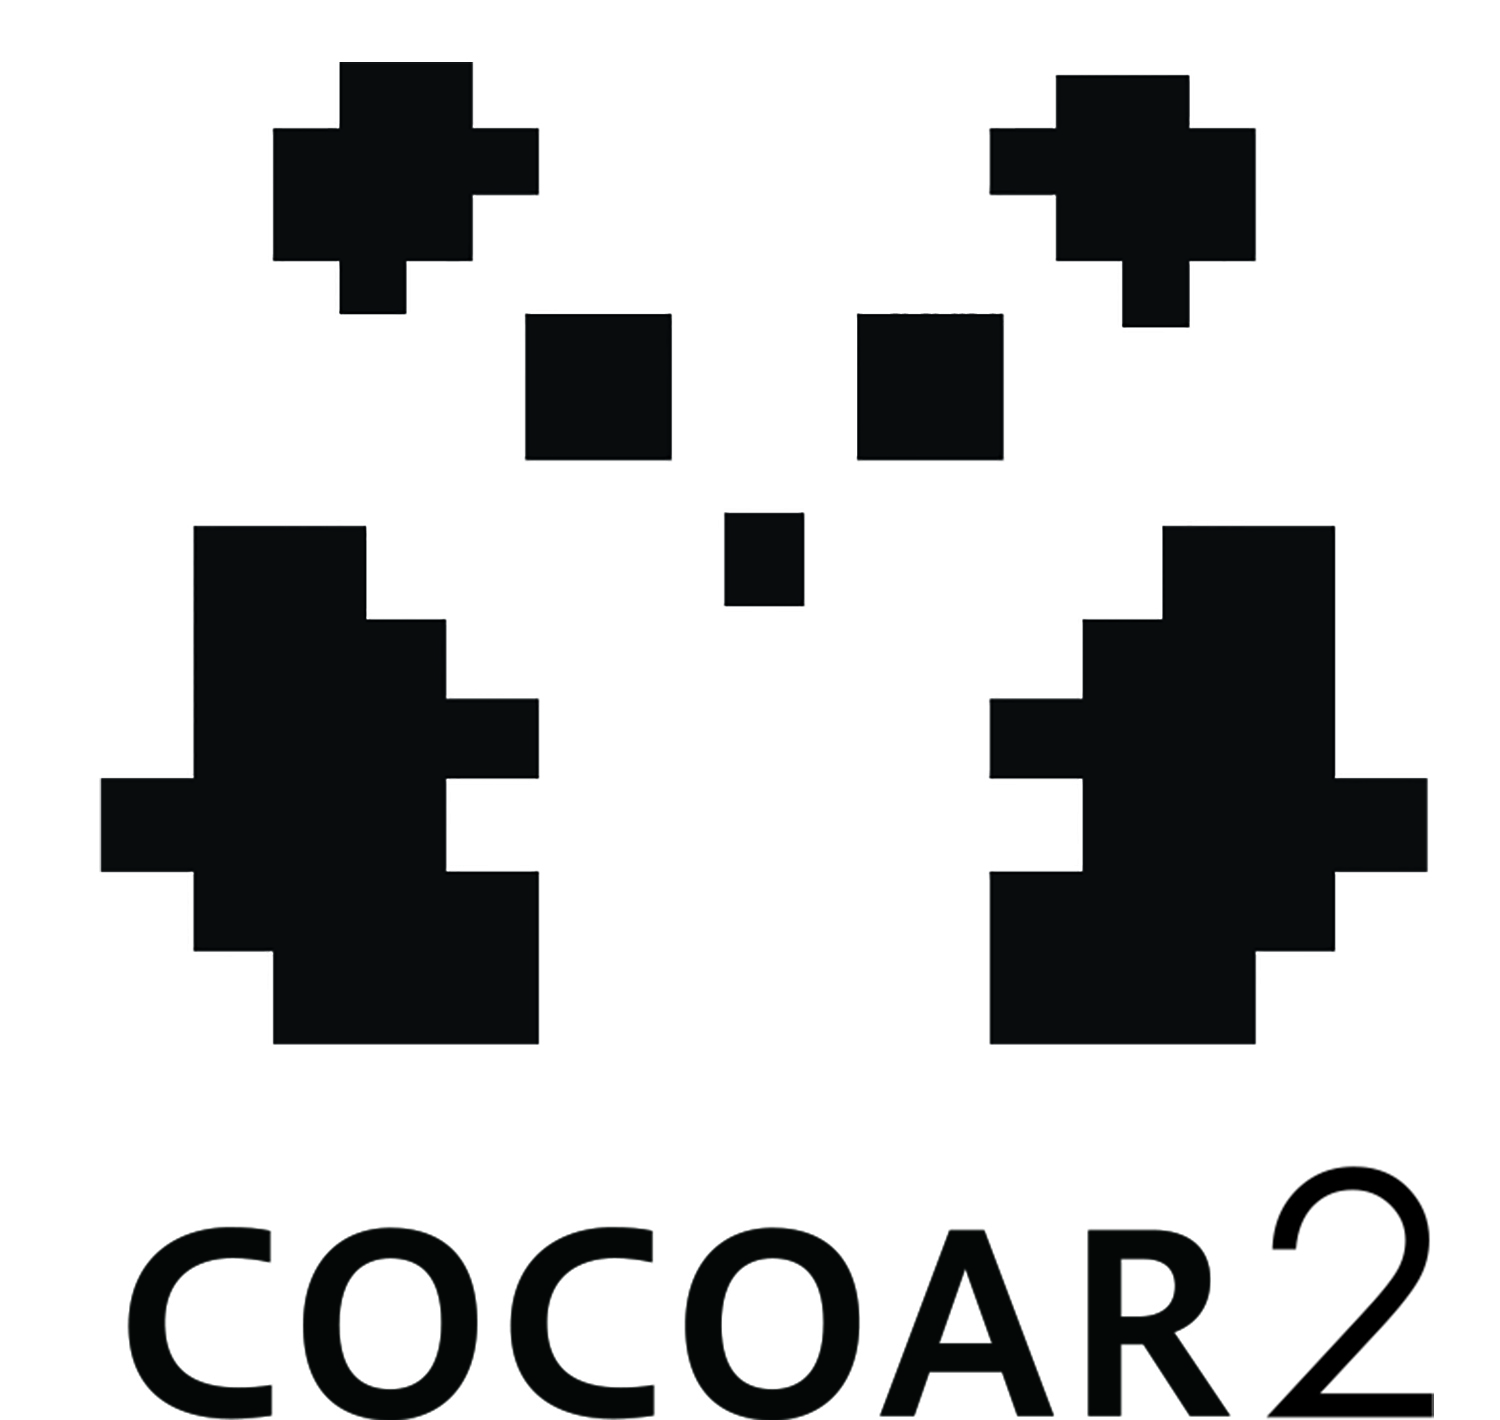 COCOAR2panda.jpg